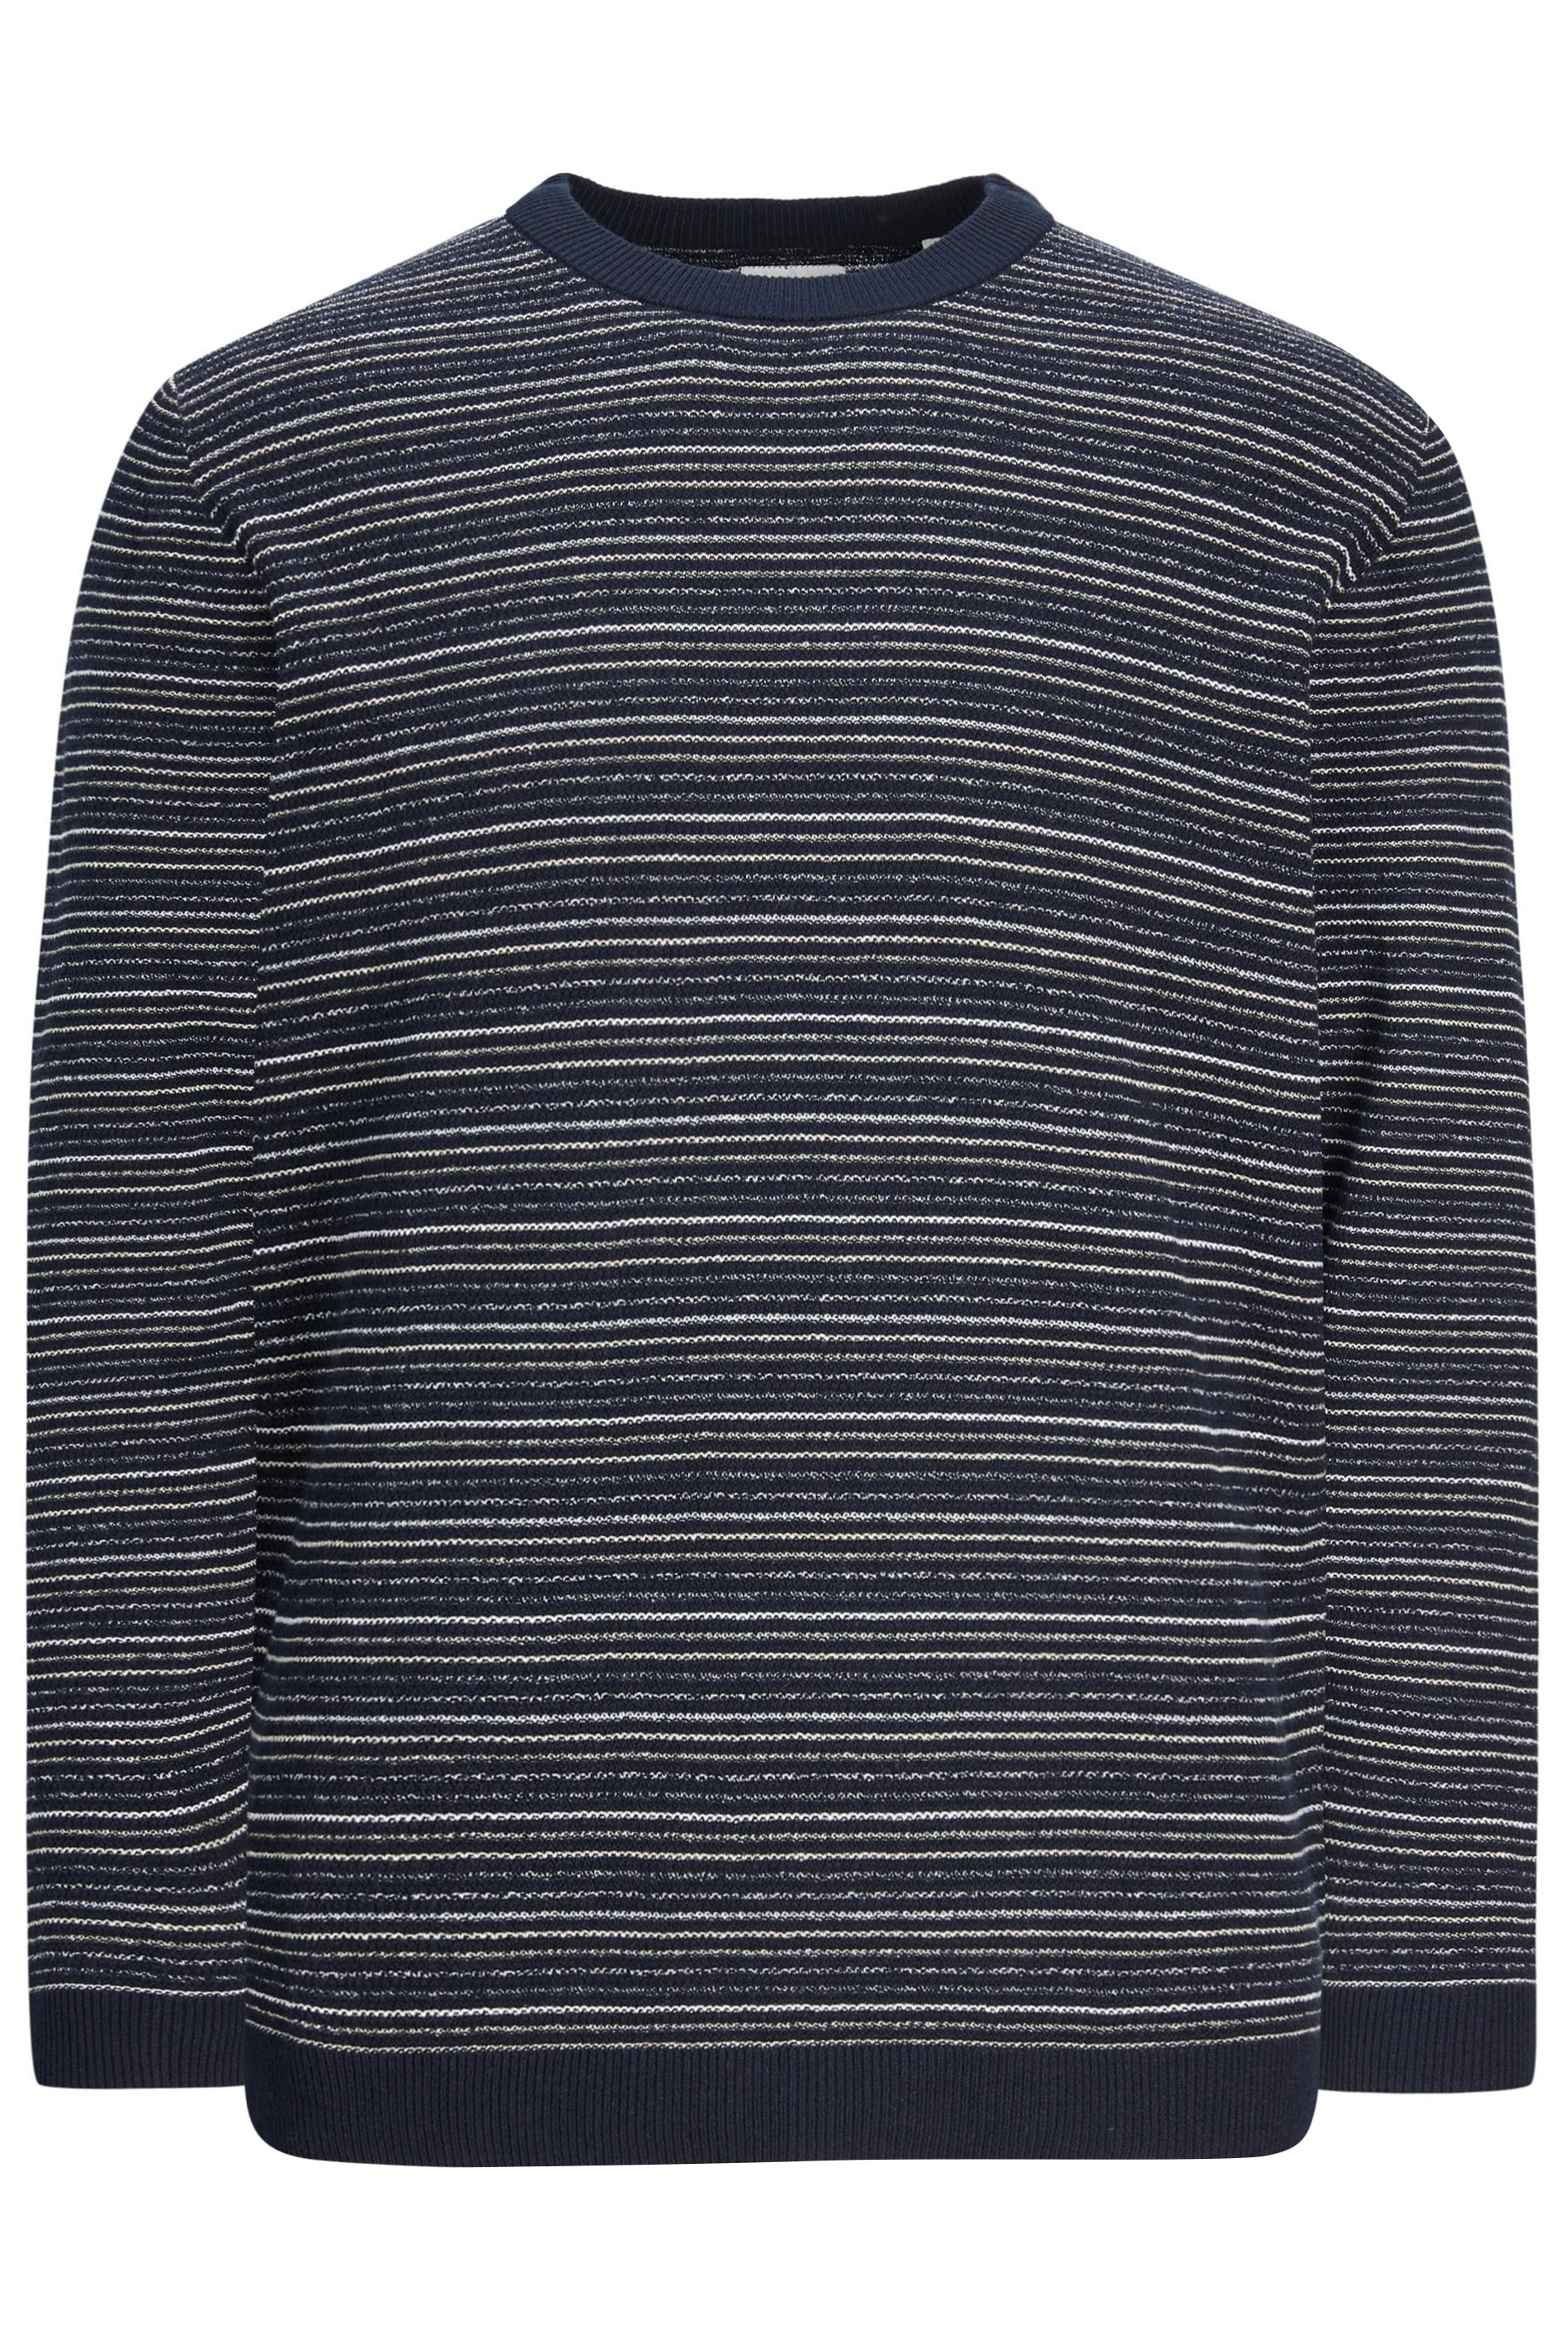 JACK & JONES Big & Tall Navy Blue Stripe Knitted Jumper | BadRhino 2